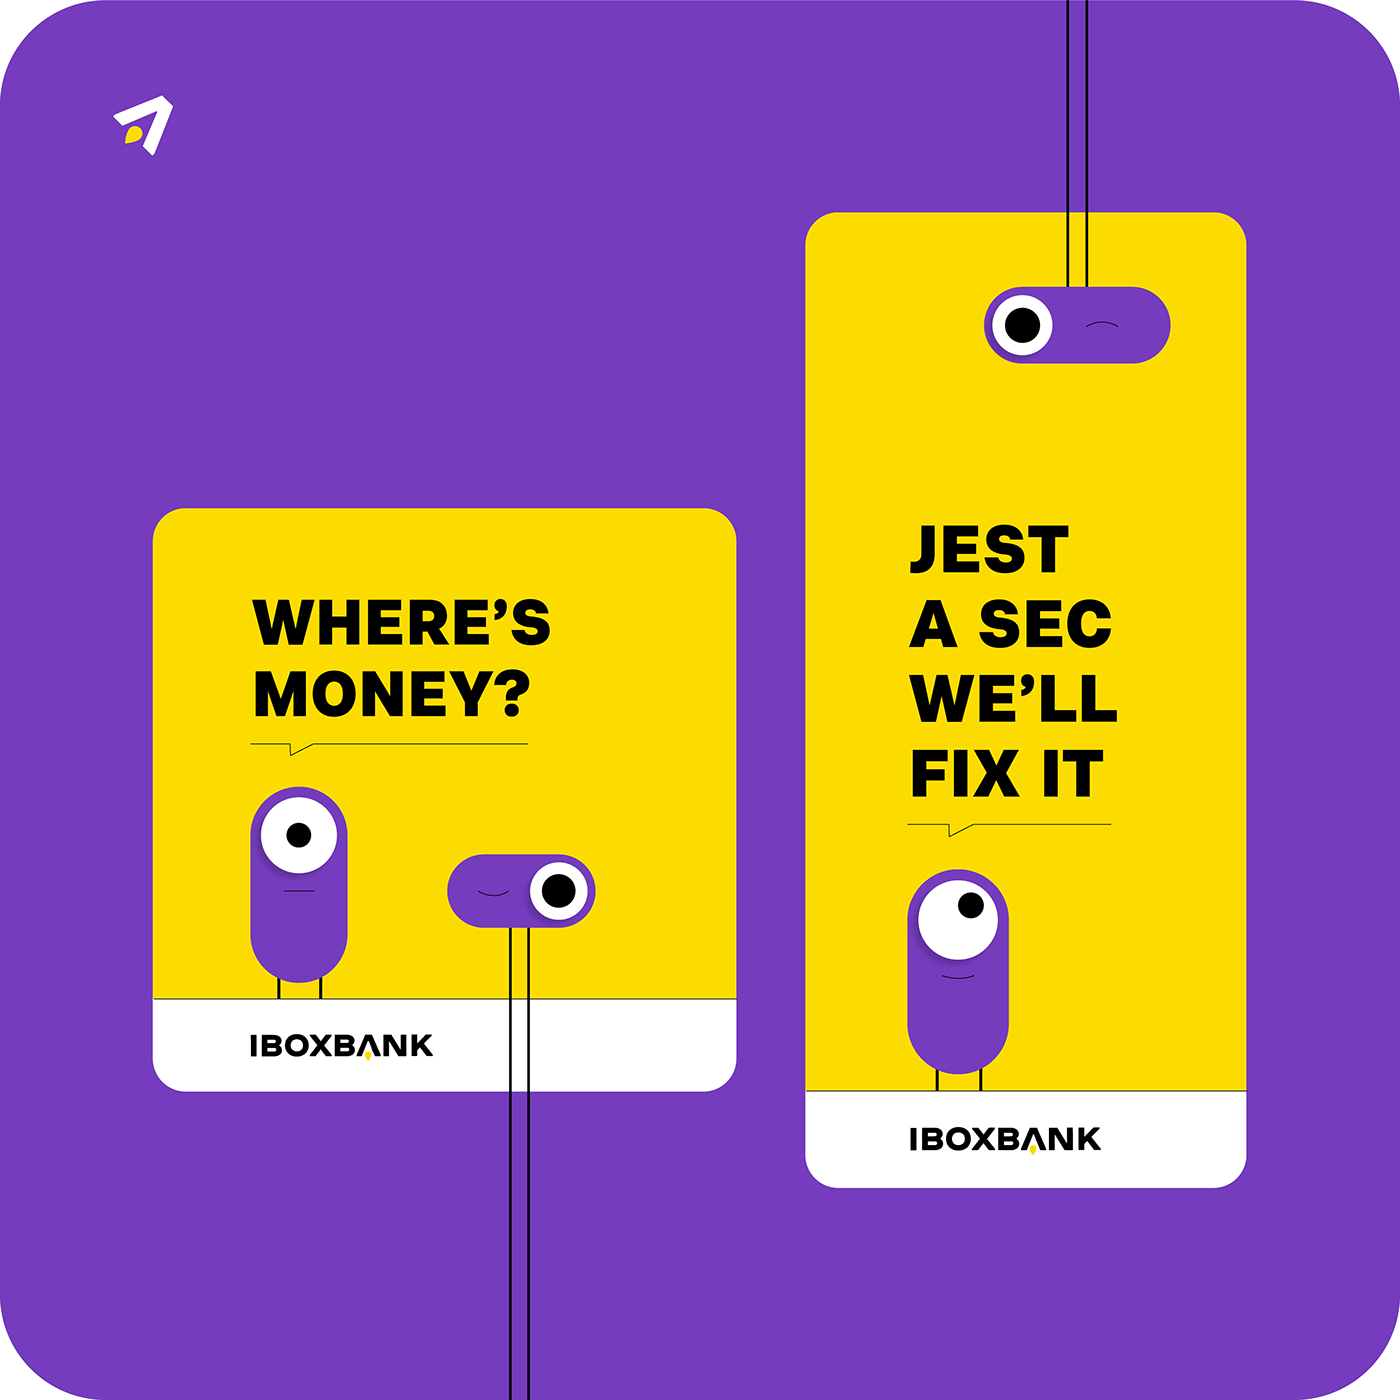 Bank brand Fun ibox ibox bank identity rocket SWIPE violet yellow